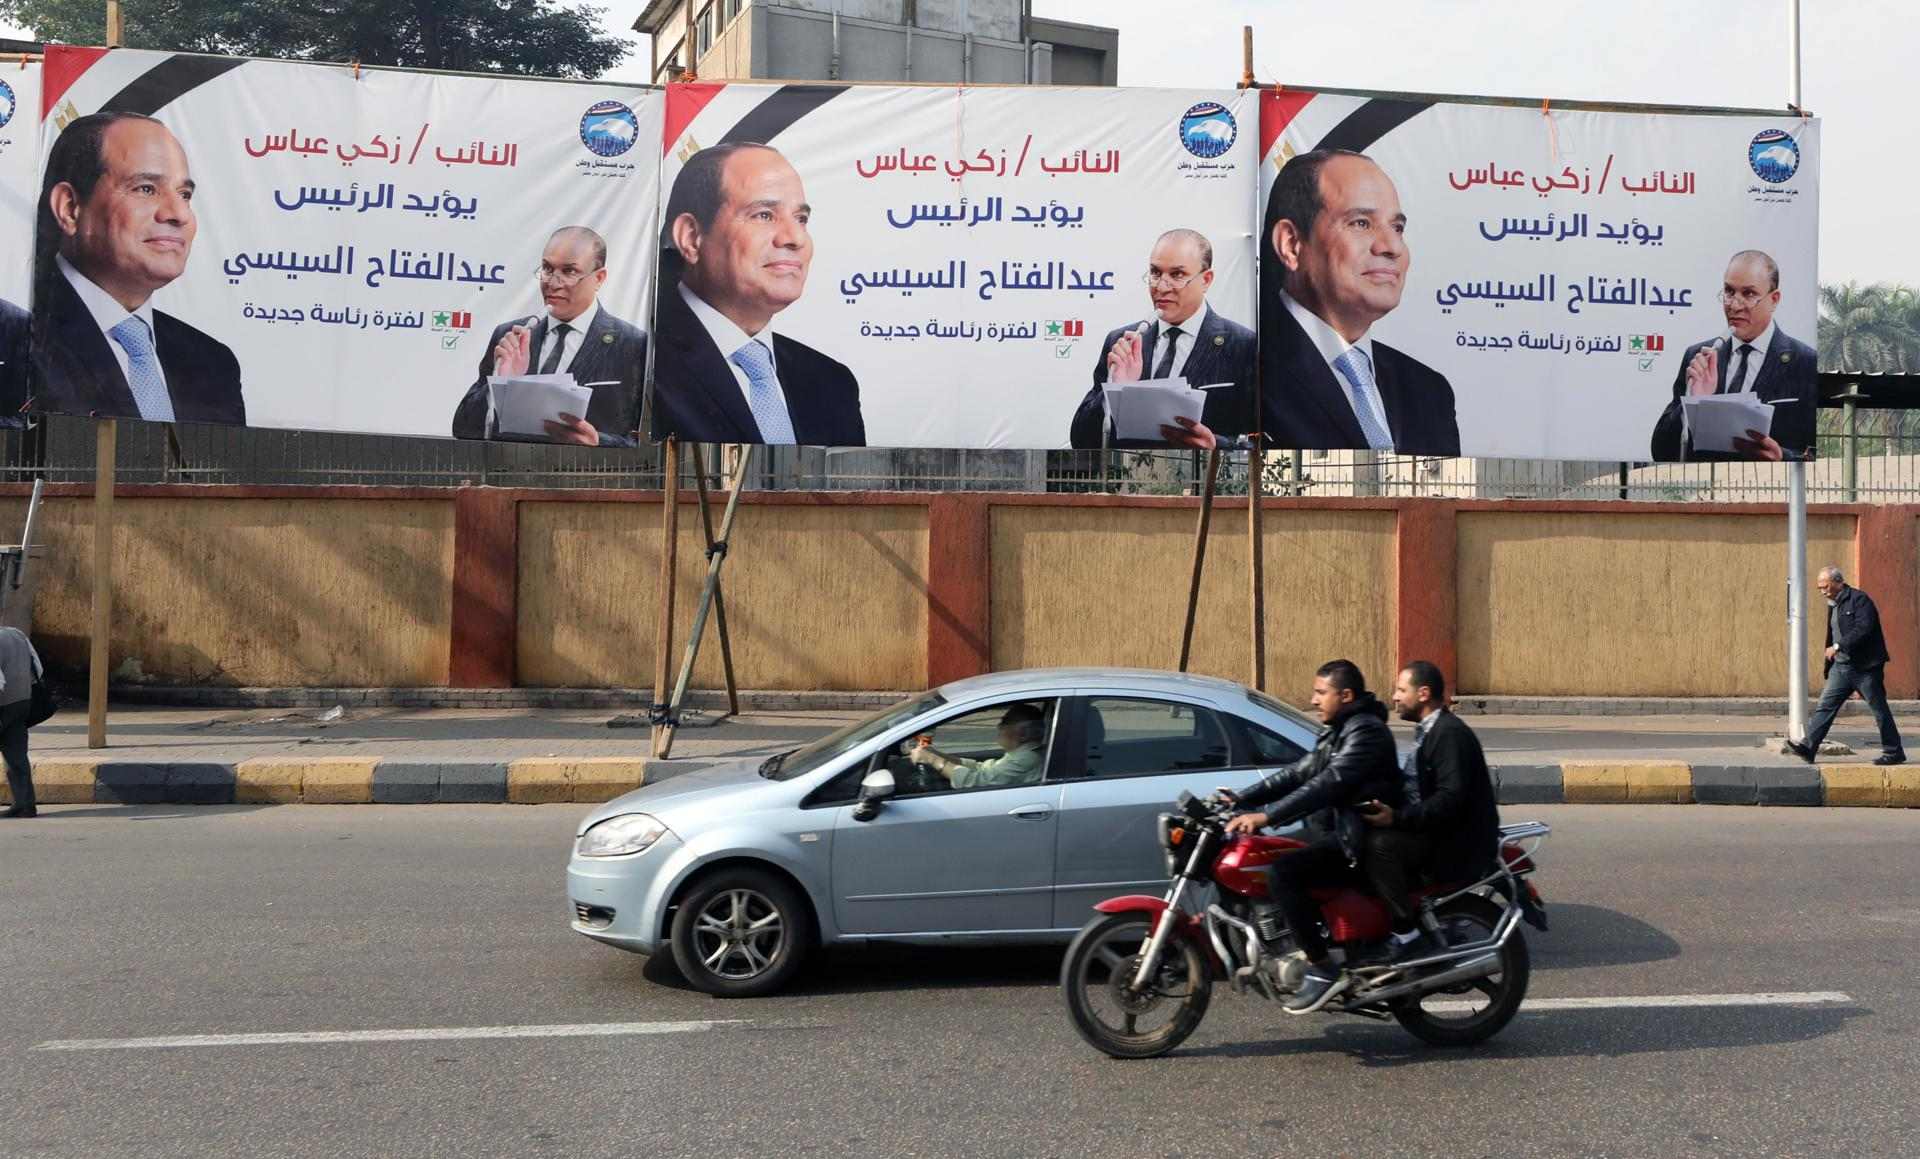 Egipto celebra elecciones presidenciales con Al Sisi como candidato favorito